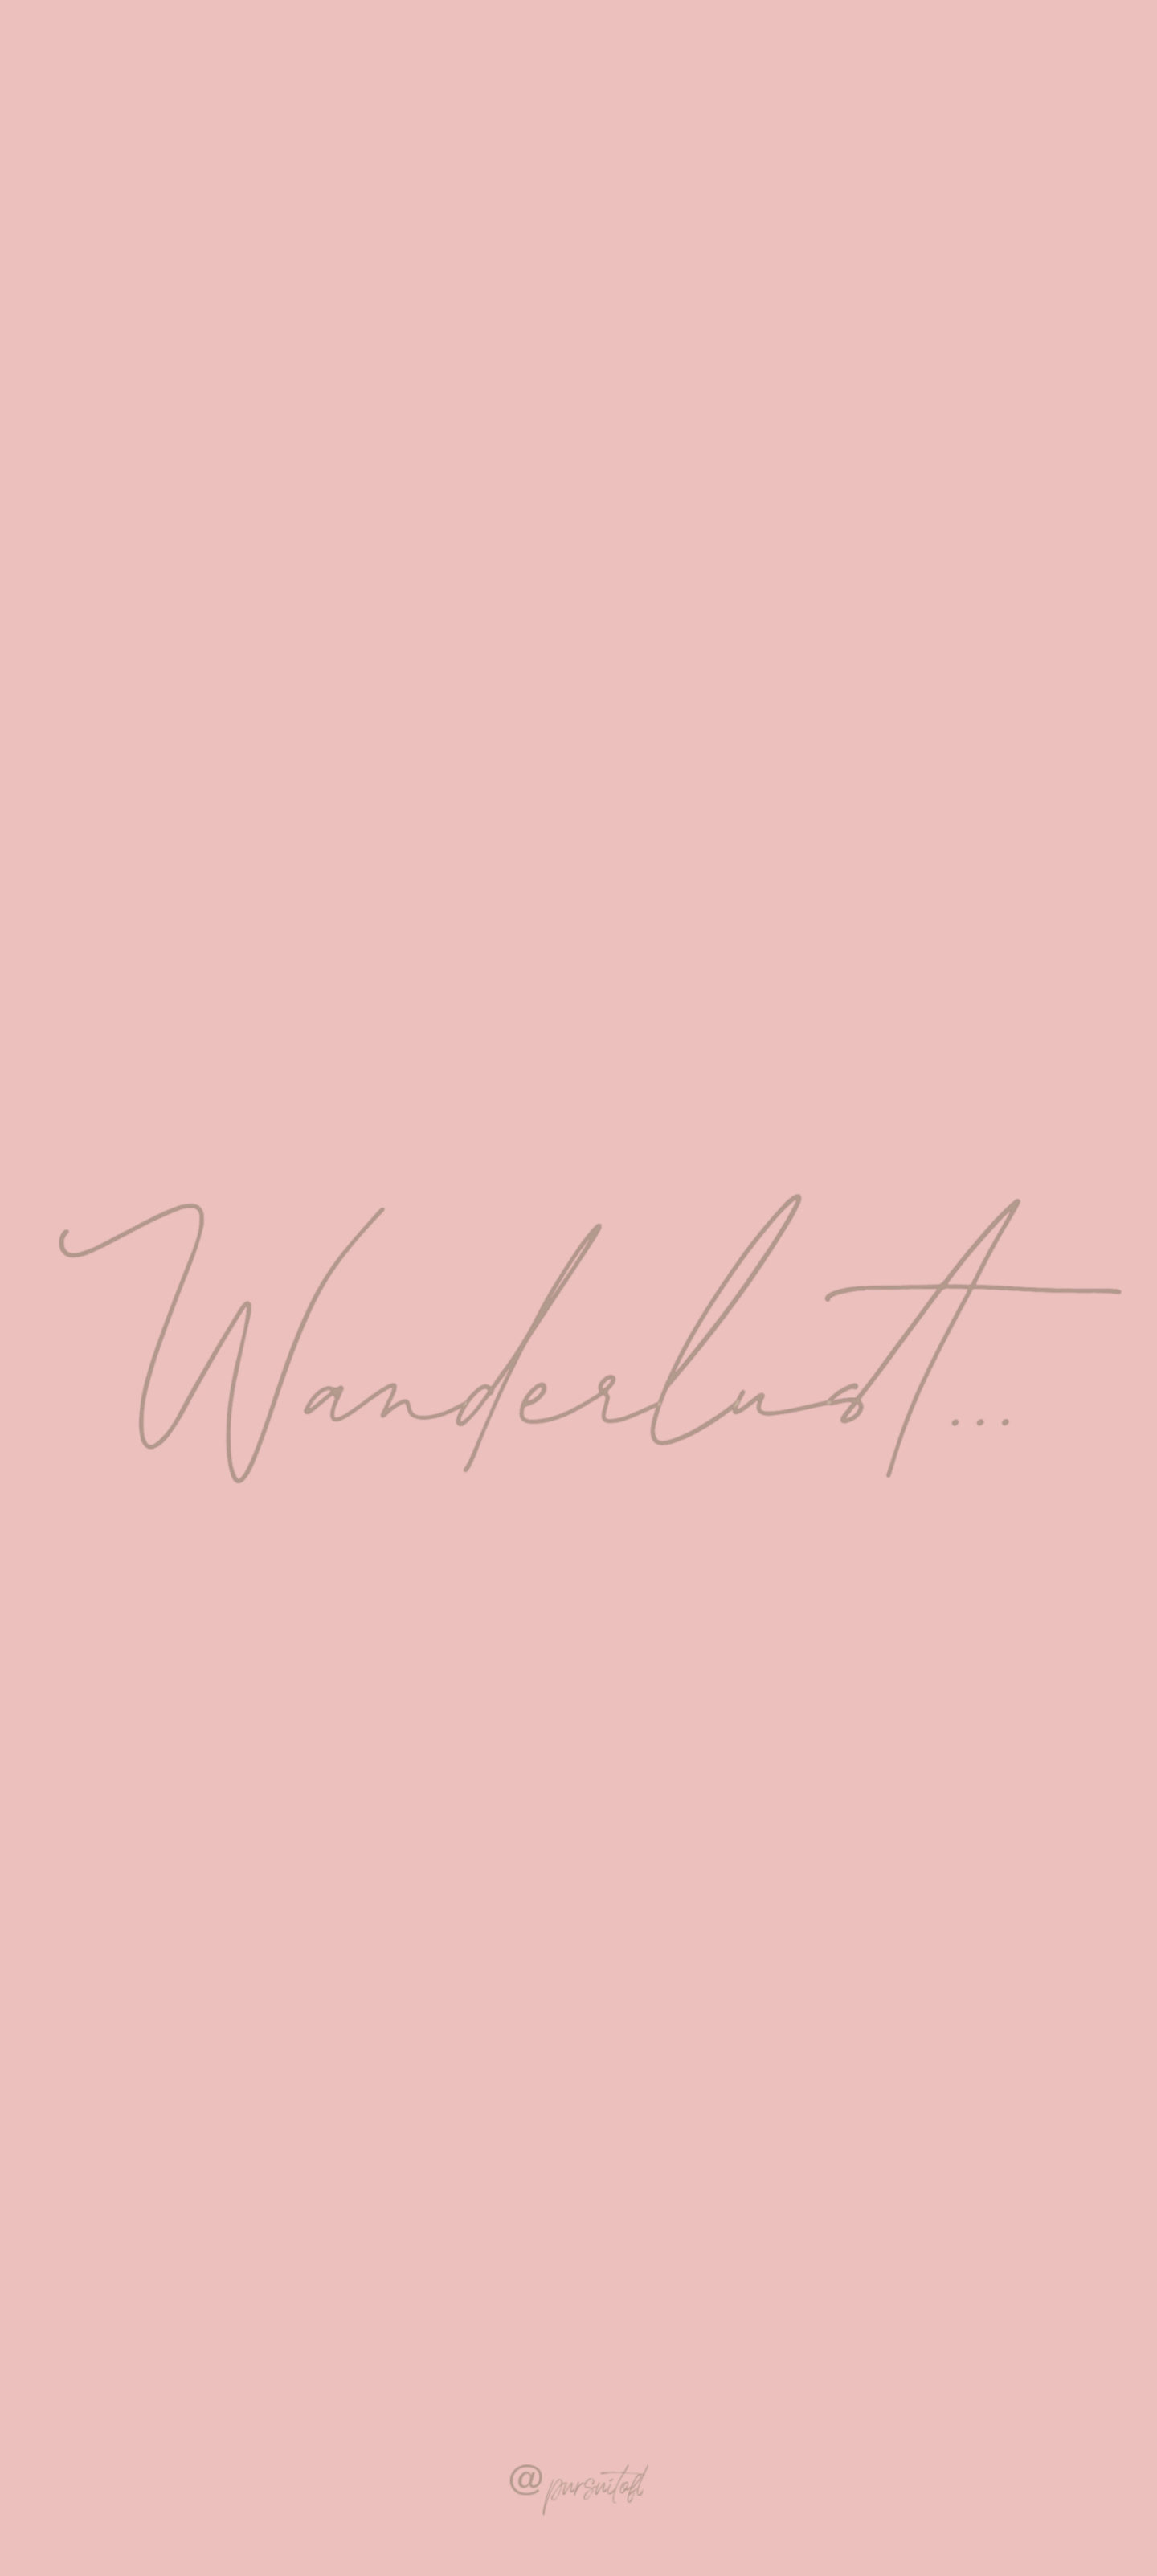 Blush pink phone wallpaper with wanderlust handwriting text. 